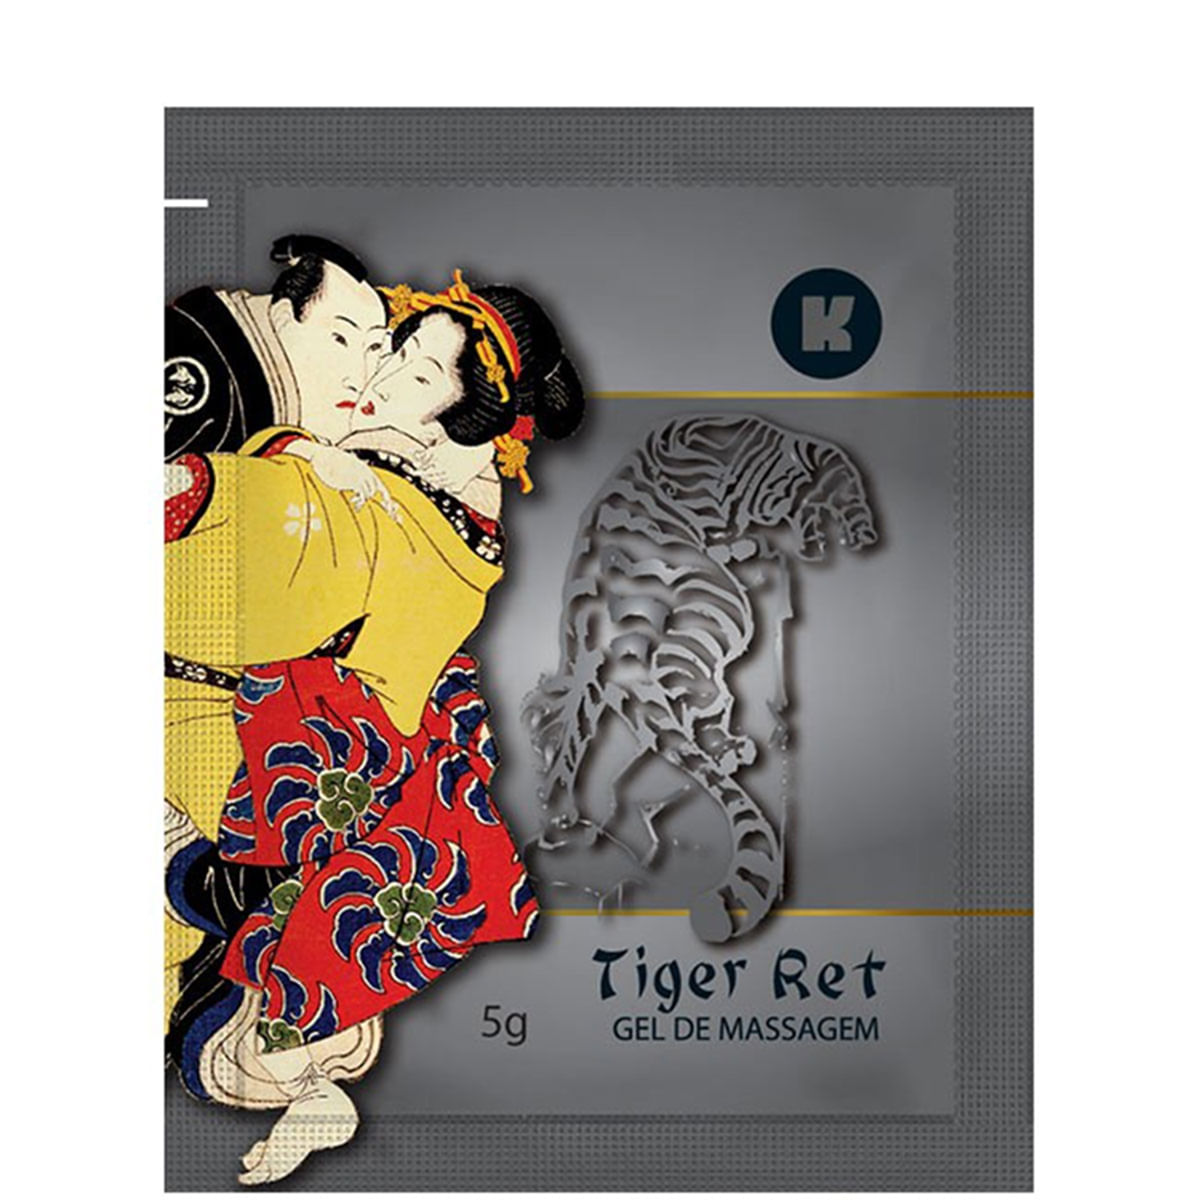 Tiger Ret Relaxa e Descontrair Gel para Massagem Corporal 5g K-gel